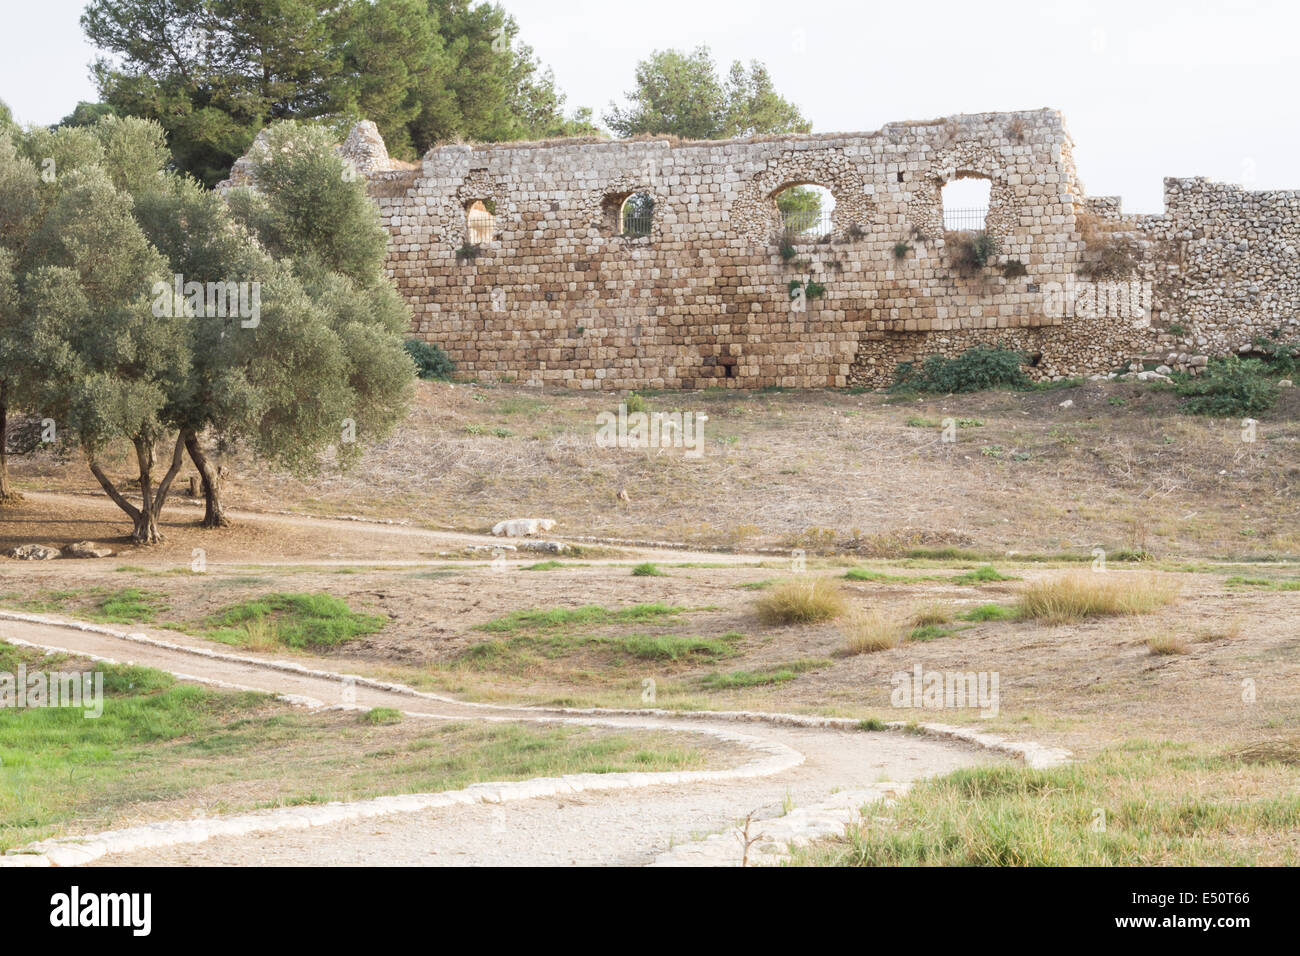 Antipatris fortress . Stock Photo